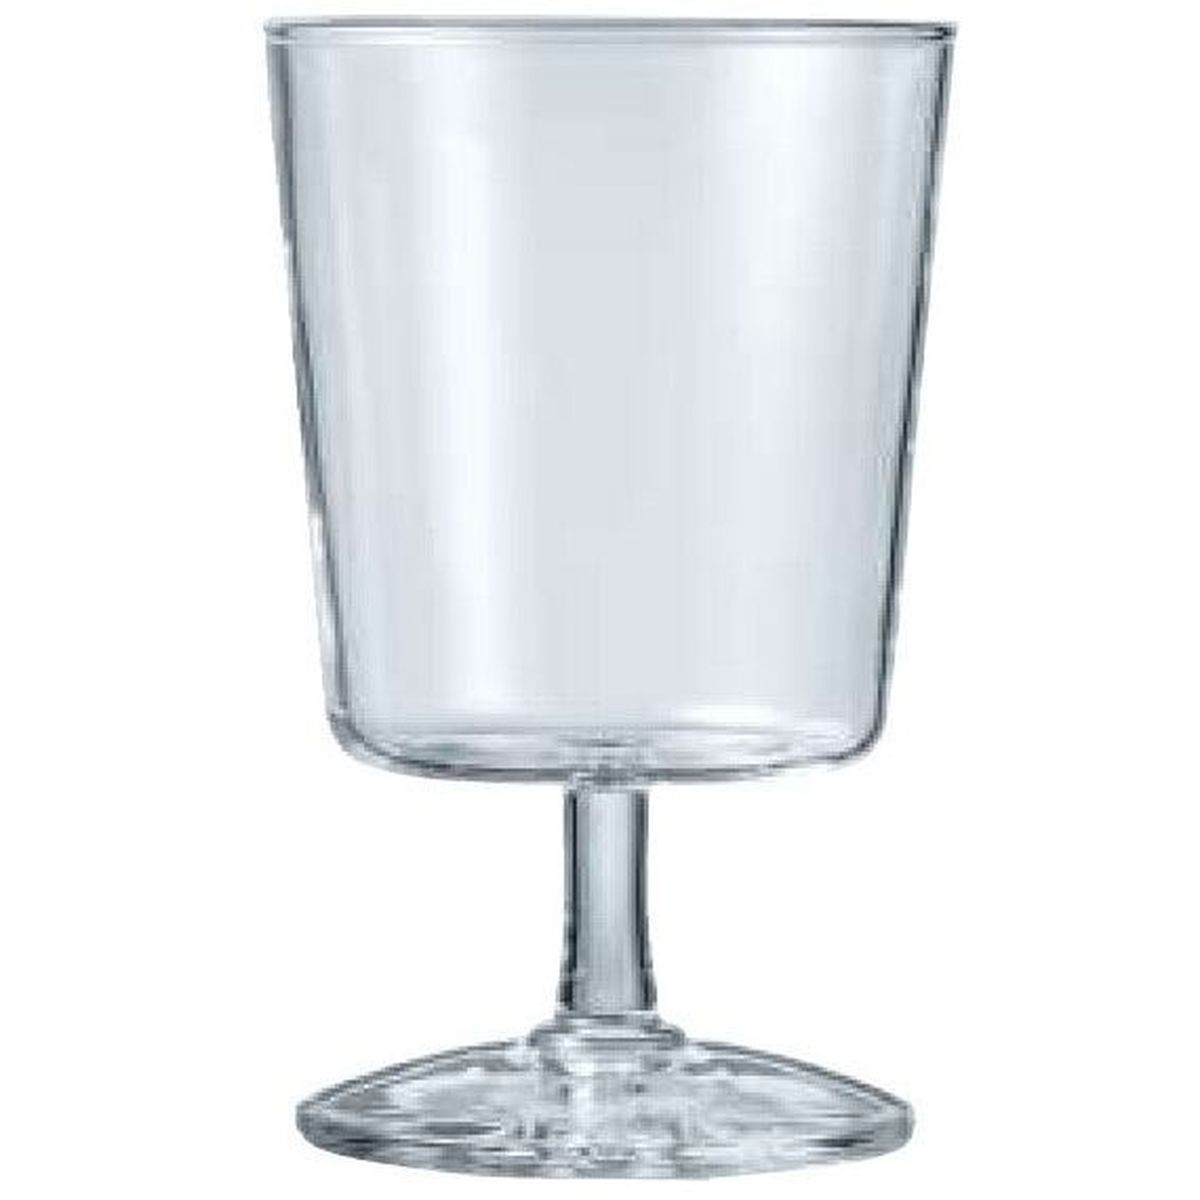 SimplyHARIO Glass Goblet